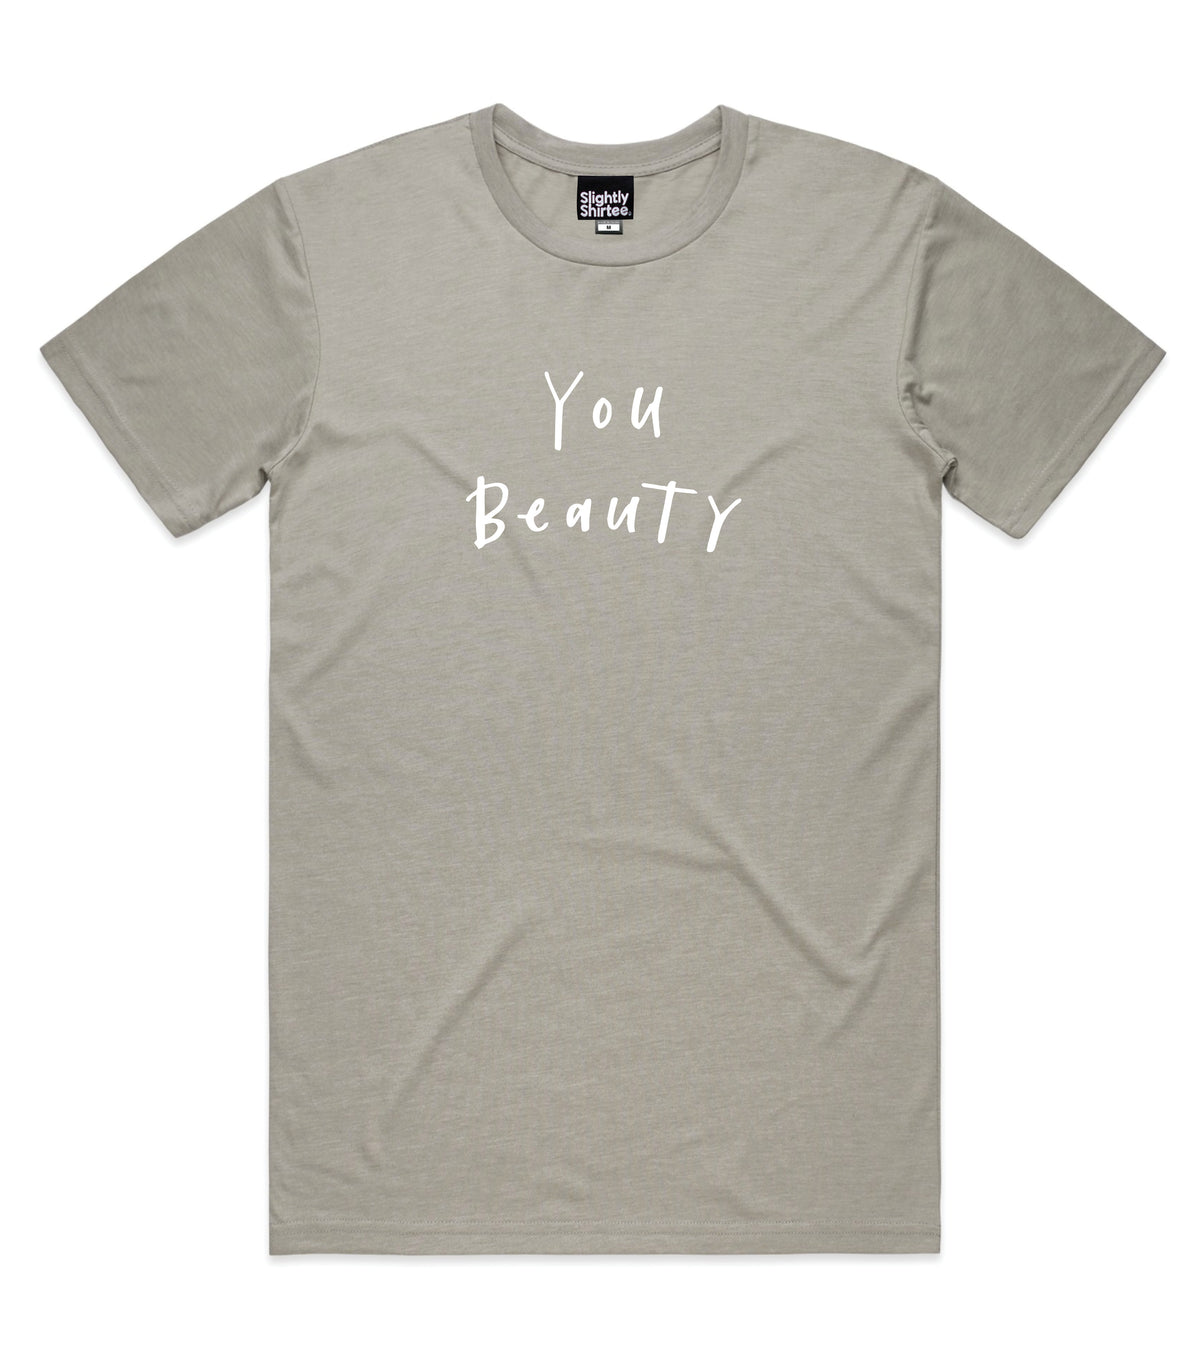 You Beauty tee - Light Grey